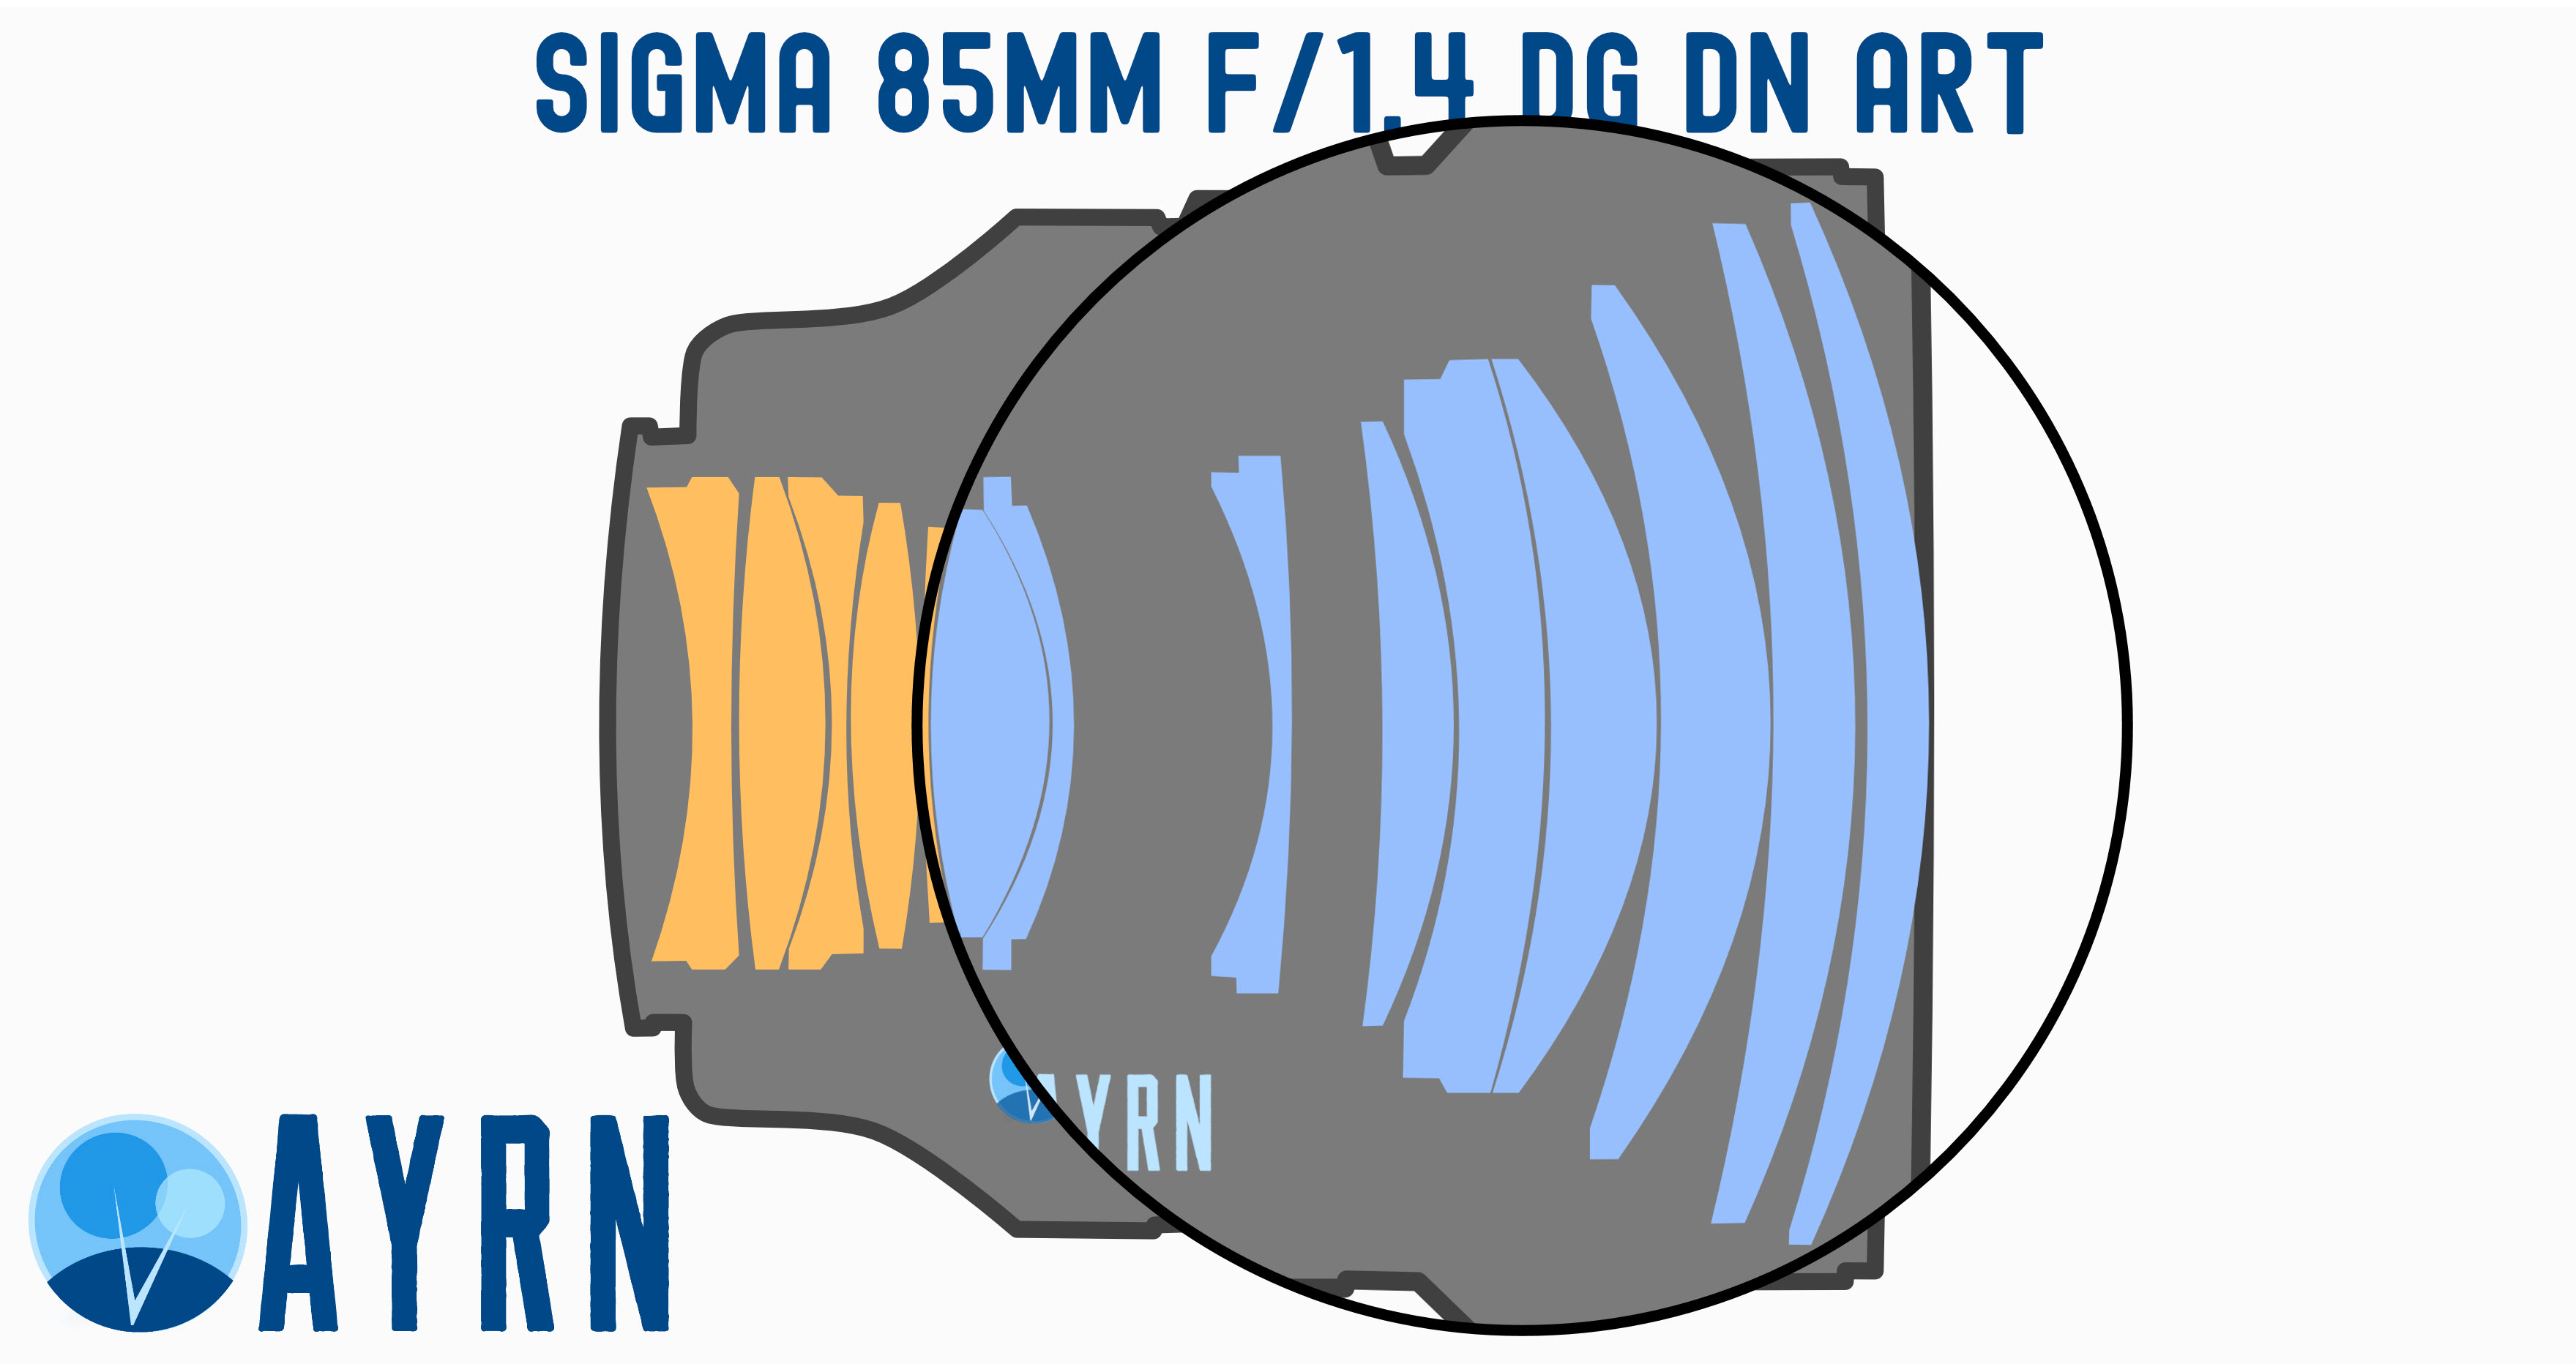 Sigma 85mm f/1.4 DG DN Art Front Elements Illustration